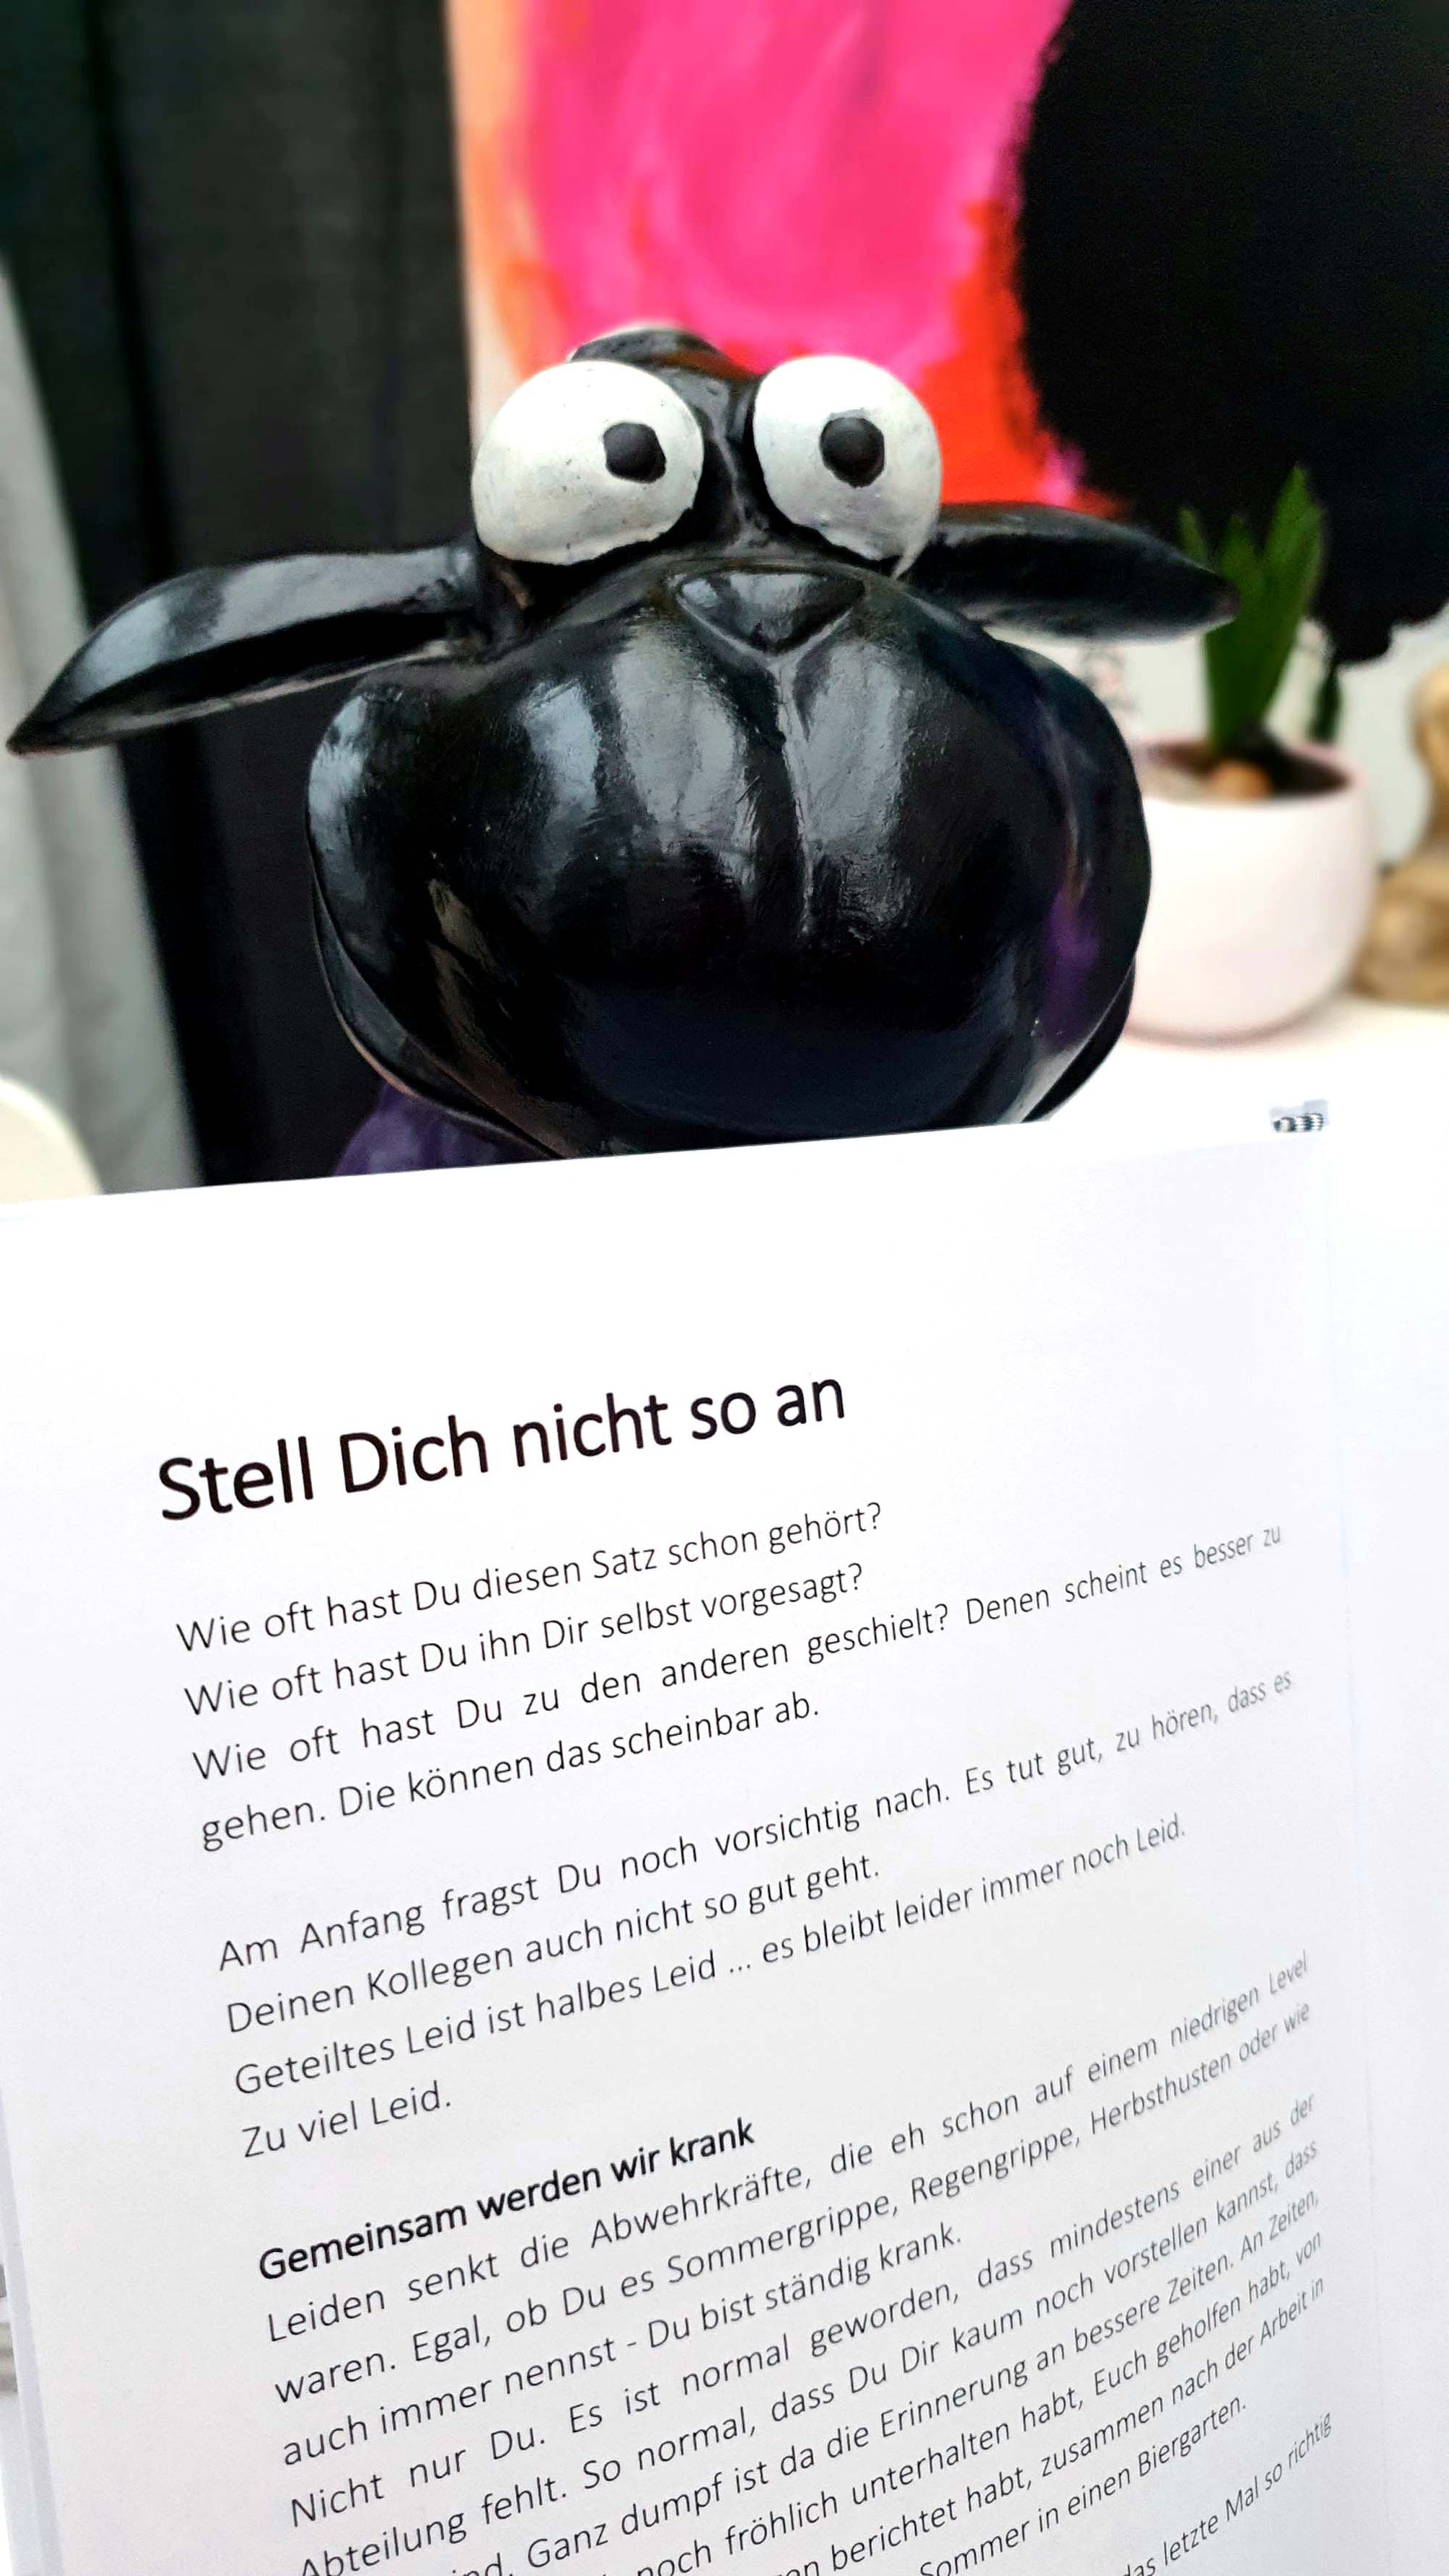 Schwarzes Schaf Auszug aus dem Buch "Wie wär's mal mit nem Schaf?" Überschrift: Stell Dich nicht so an